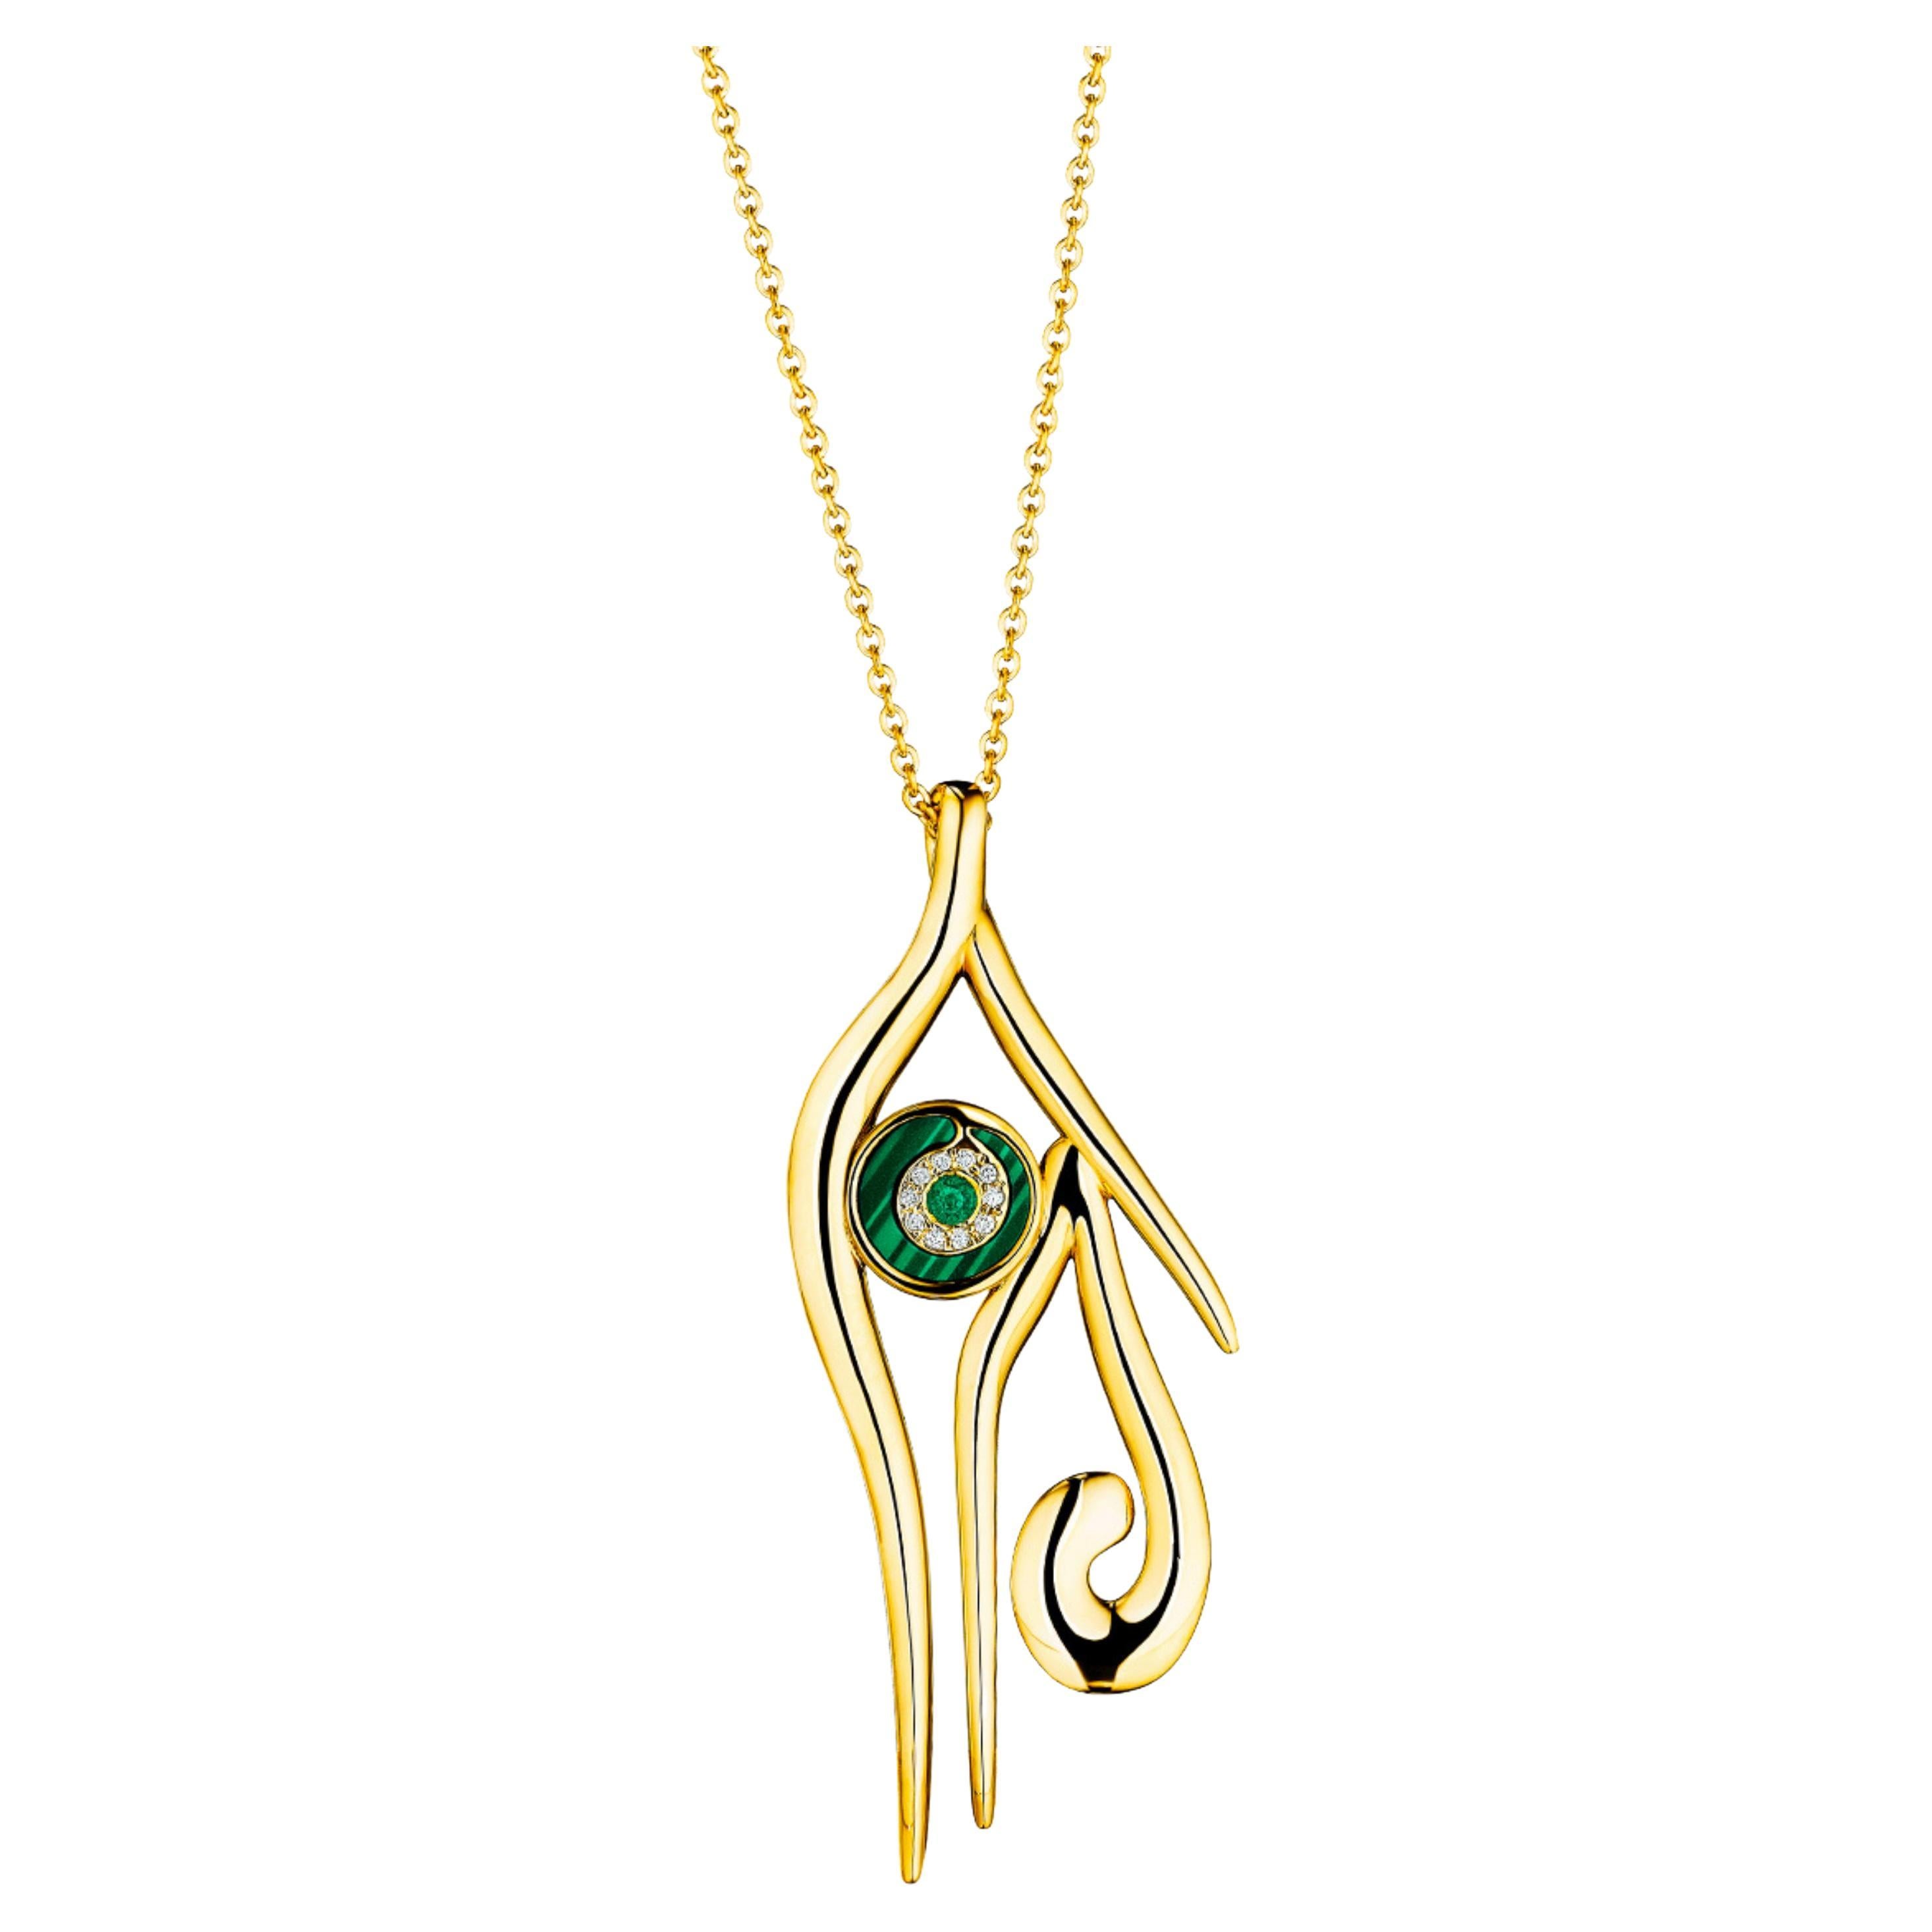 Horus Pendant in 18k Gold with Emerald & Diamonds